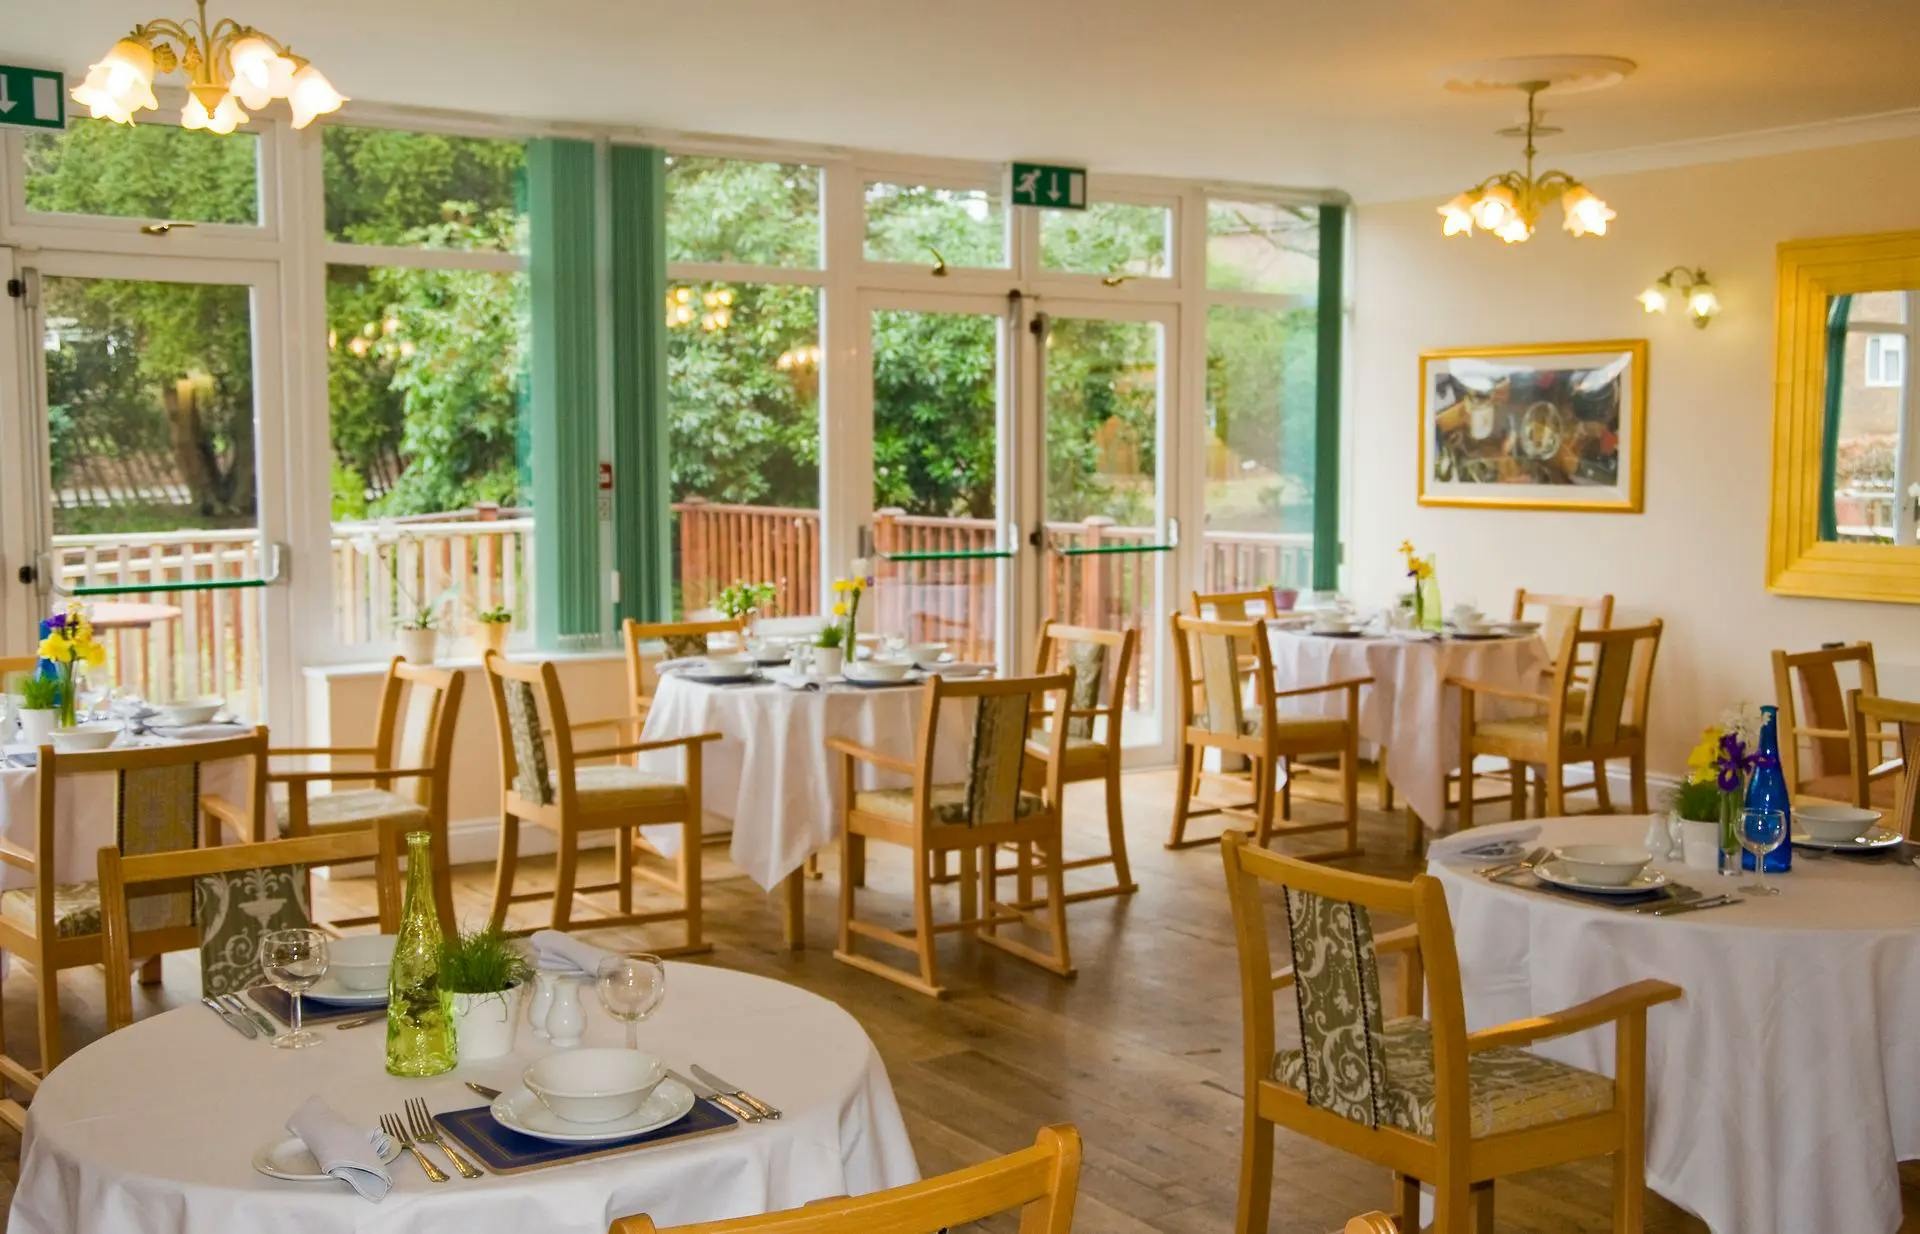 Dining area of Kippingtons care home in Sevenoaks, Kent